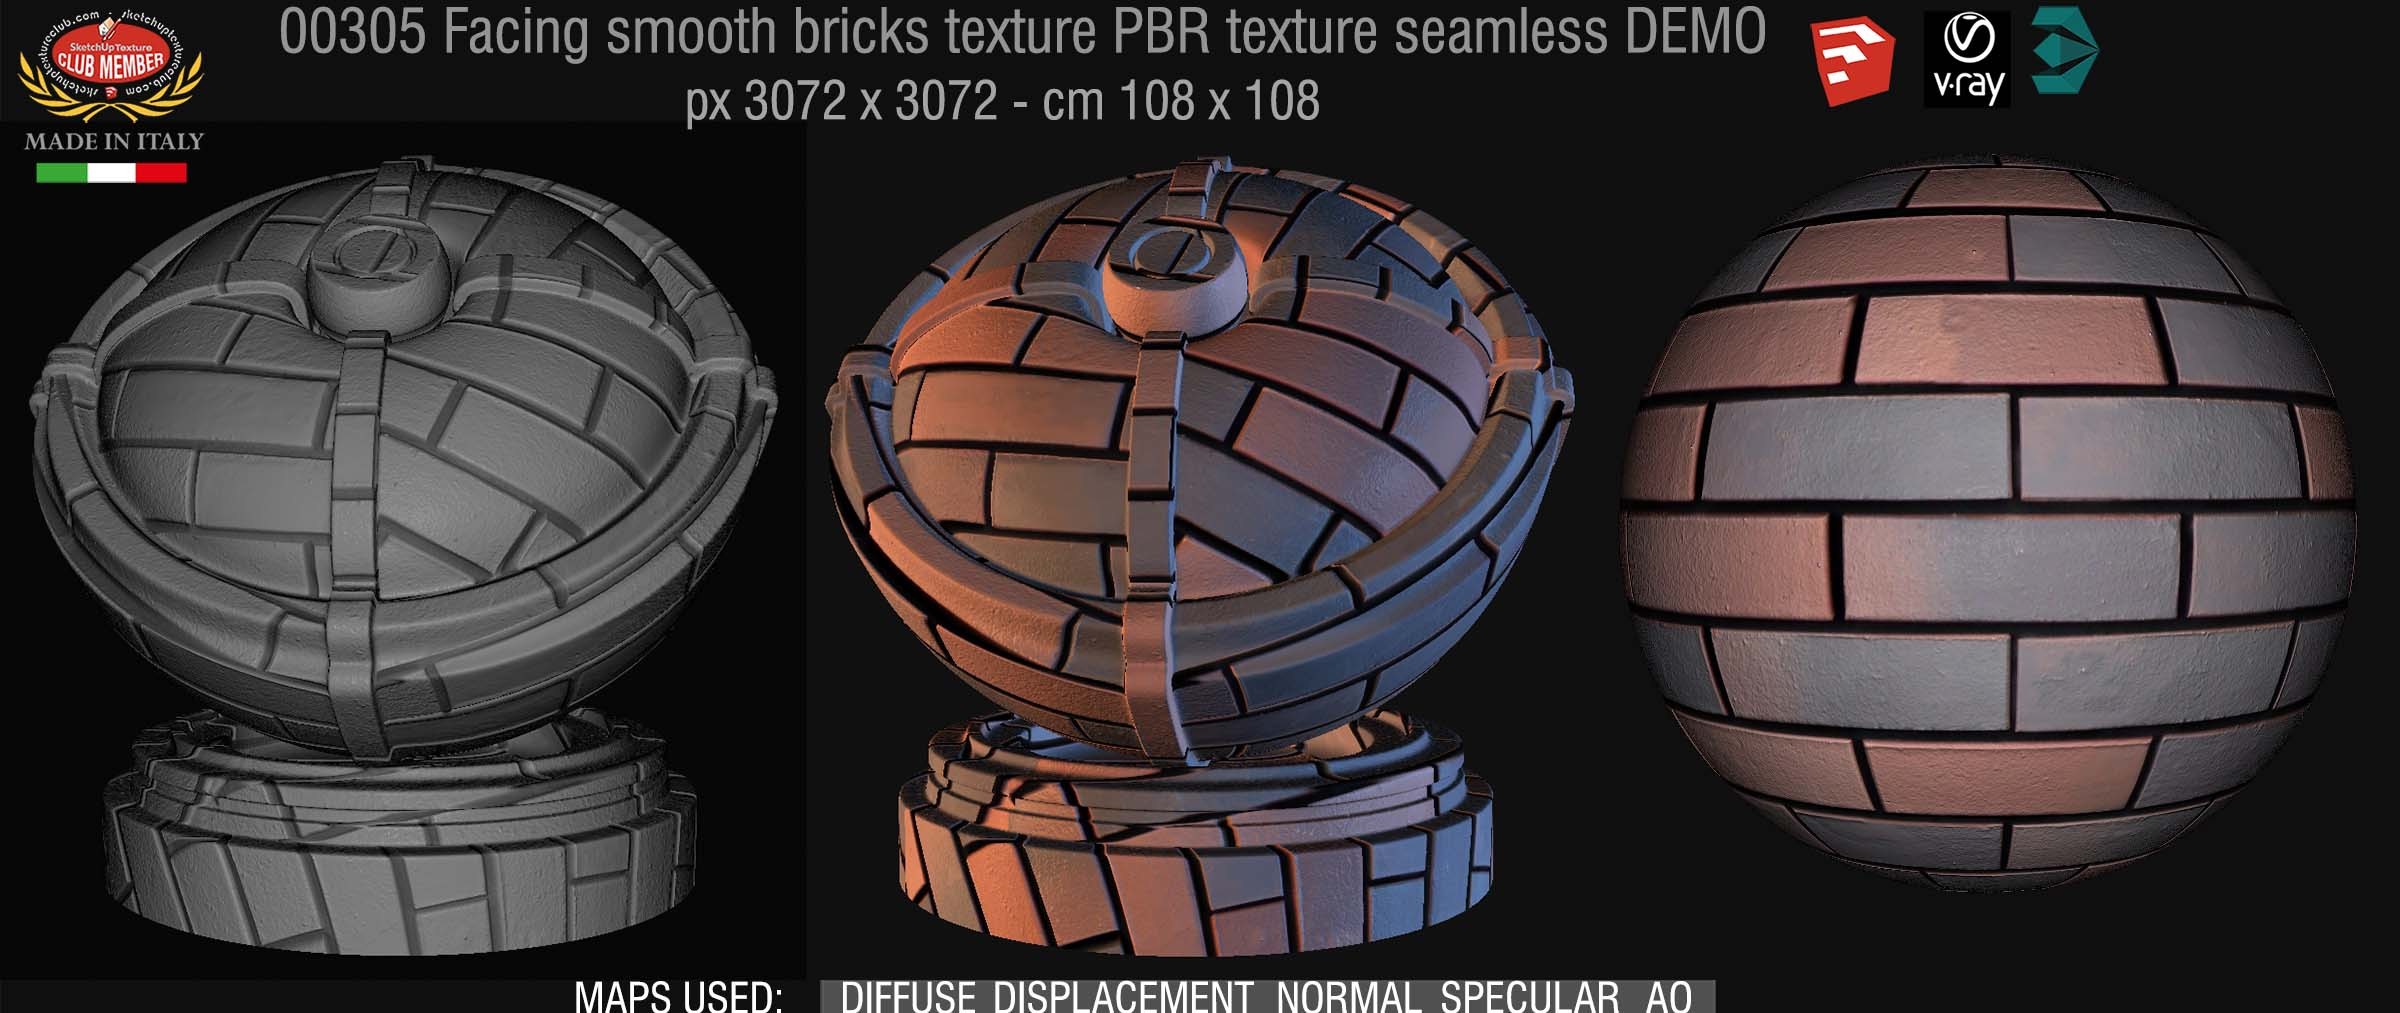 00305 Facing smooth bricks PBR texture seamless DEMO